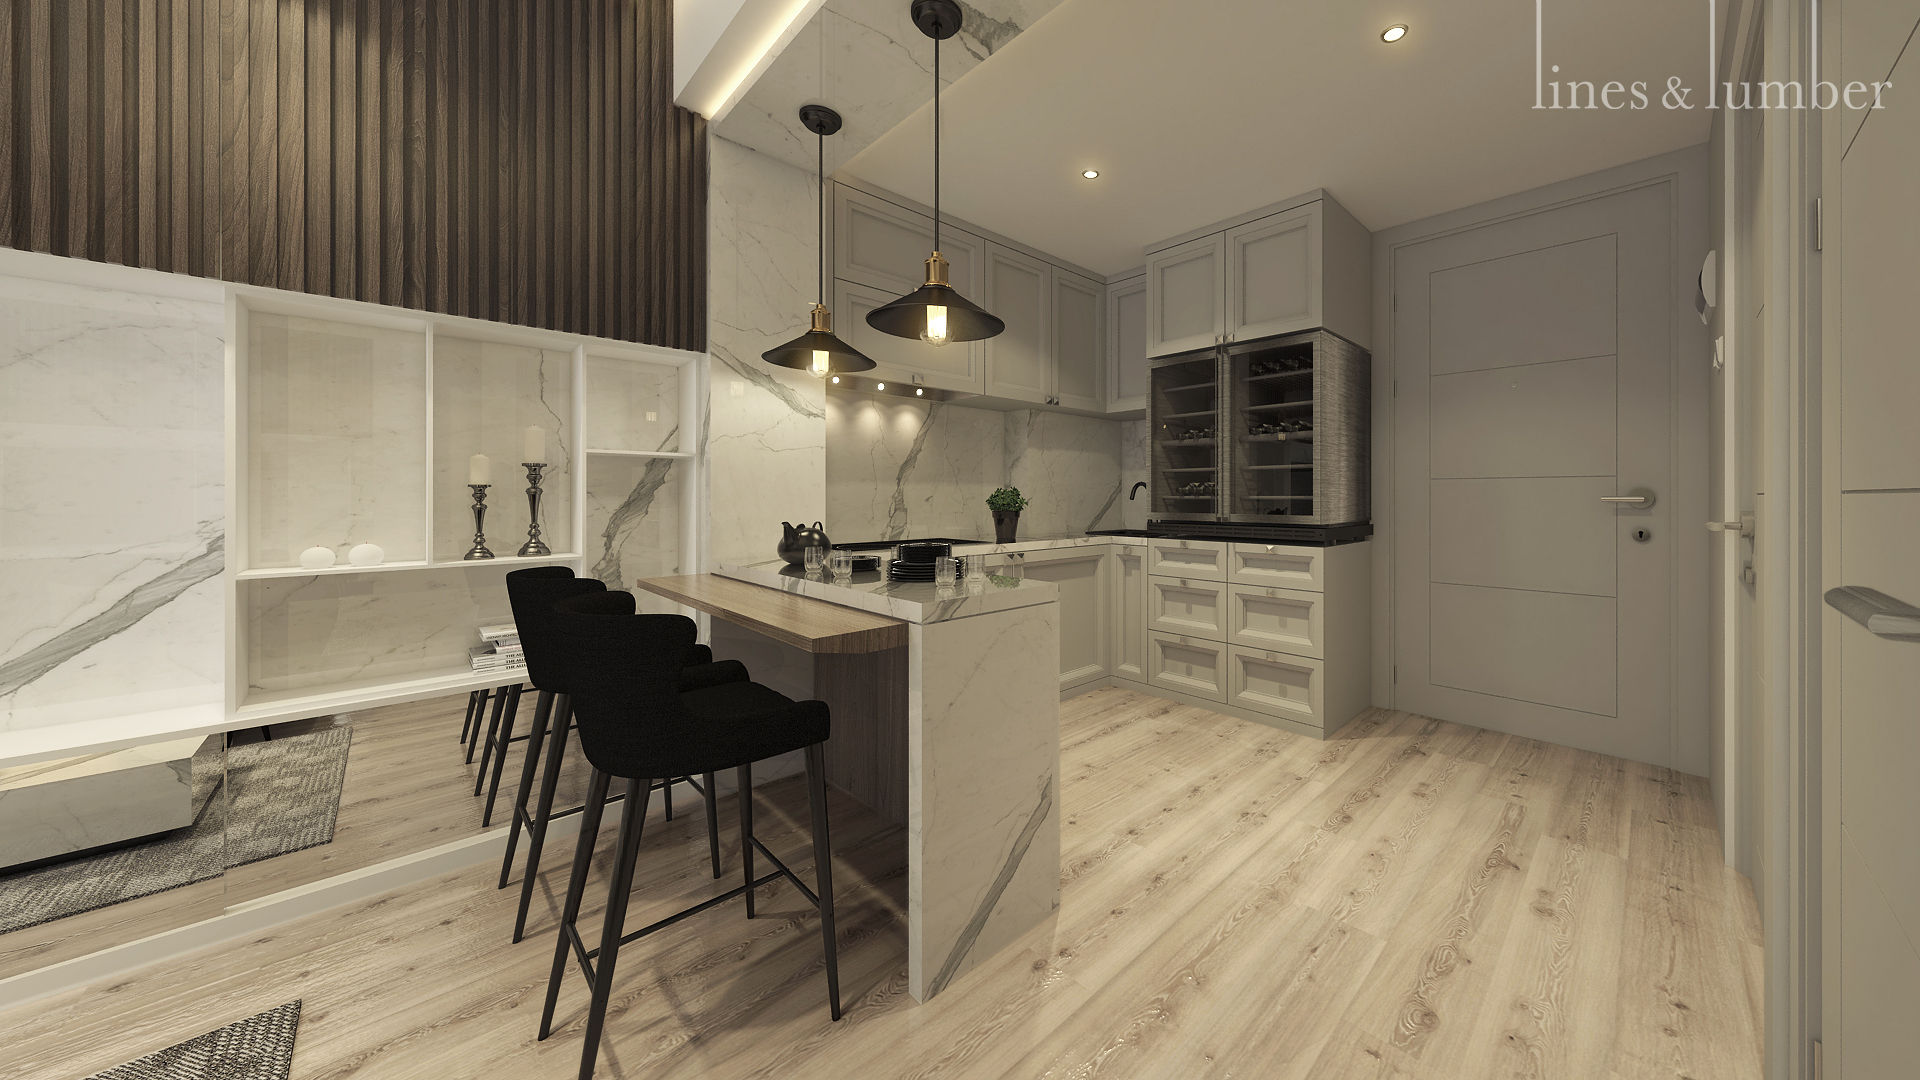 Studio Apartment, Sandalwood Springhill , Lines & Lumber Lines & Lumber Cozinhas rústicas